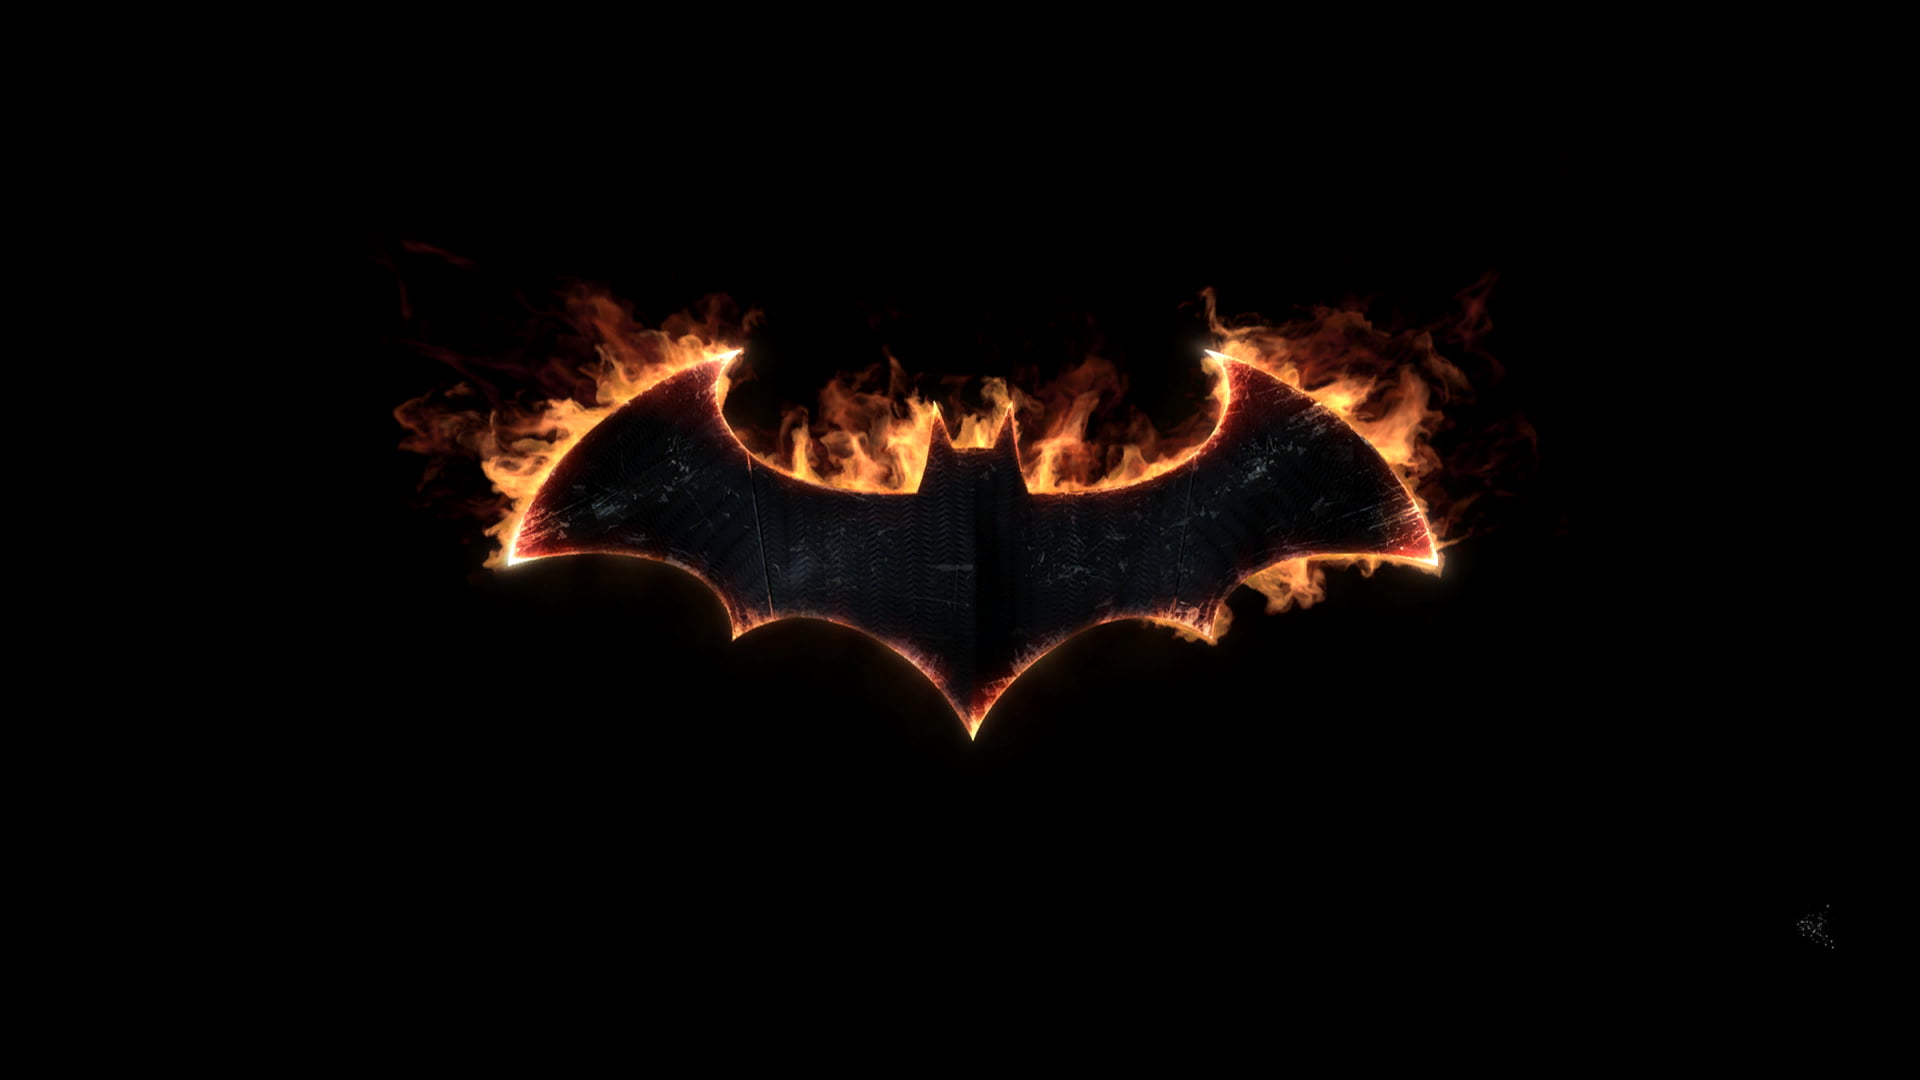 Batman digital wallpaper, Batman: Arkham Knight, heat - temperature